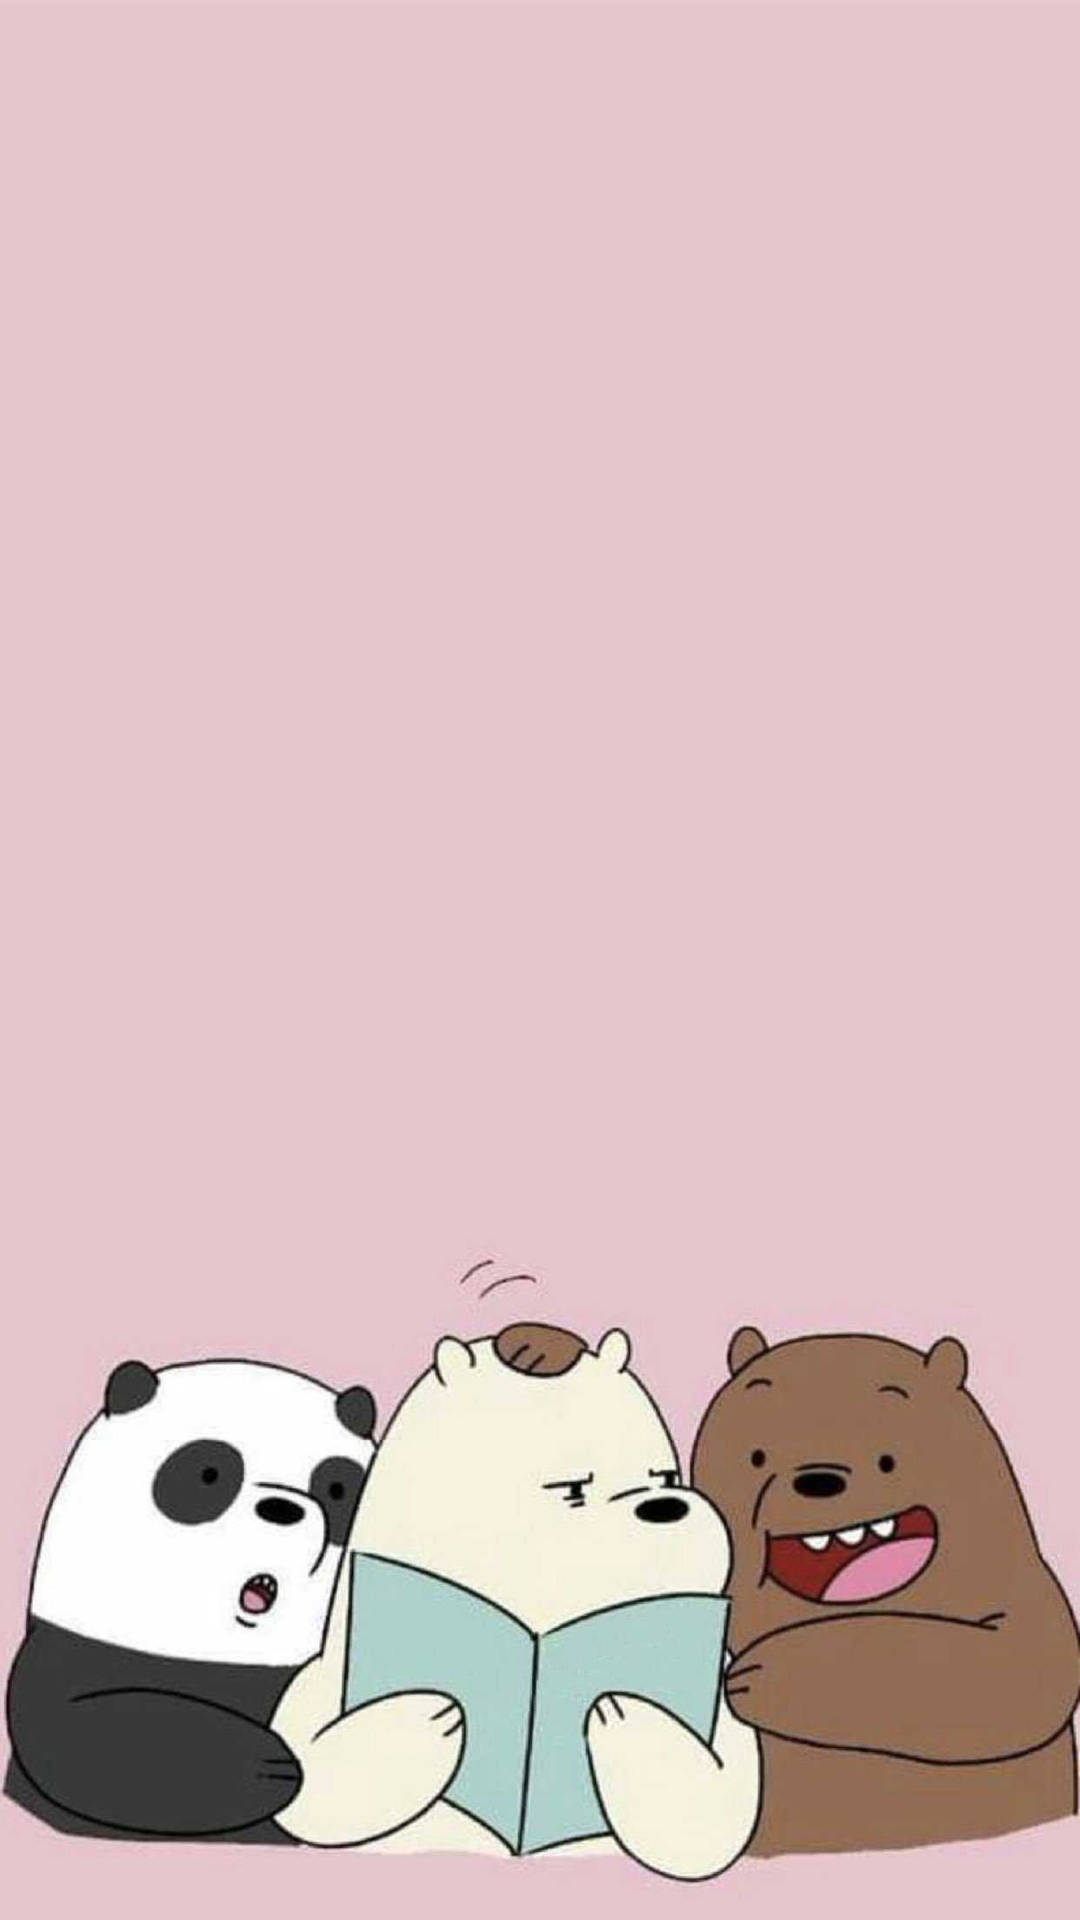 Three Playful Bears Background